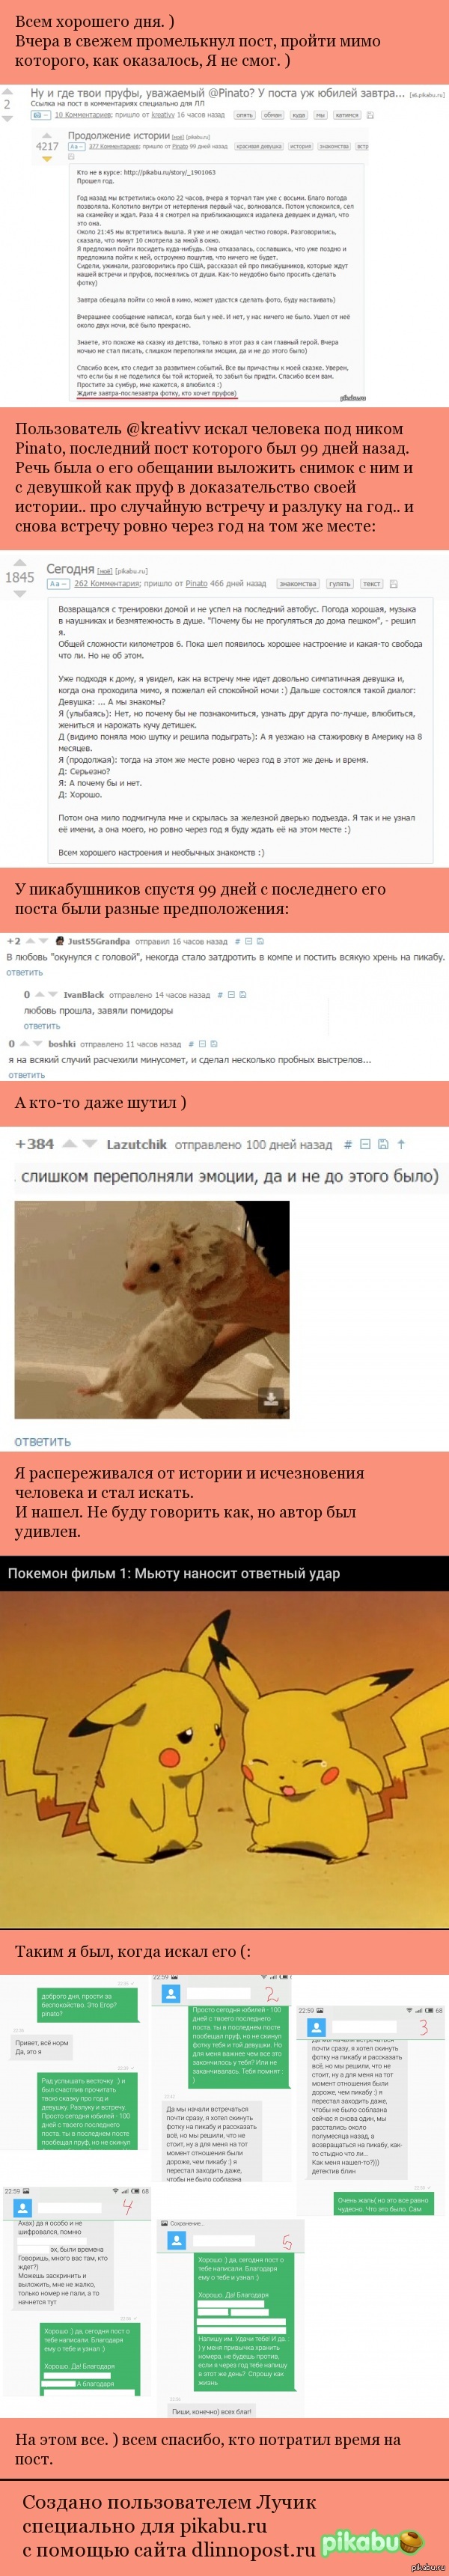 100     Pinato    <a href="http://pikabu.ru/story/nu_i_gde_tvoi_prufyi_uvazhaemyiy_pinato_u_posta_uzh_yubiley_zavtra_3308613">http://pikabu.ru/story/_3308613</a> <a href="http://pikabu.ru/story/prodolzhenie_istorii_3017676">http://pikabu.ru/story/_3017676</a>